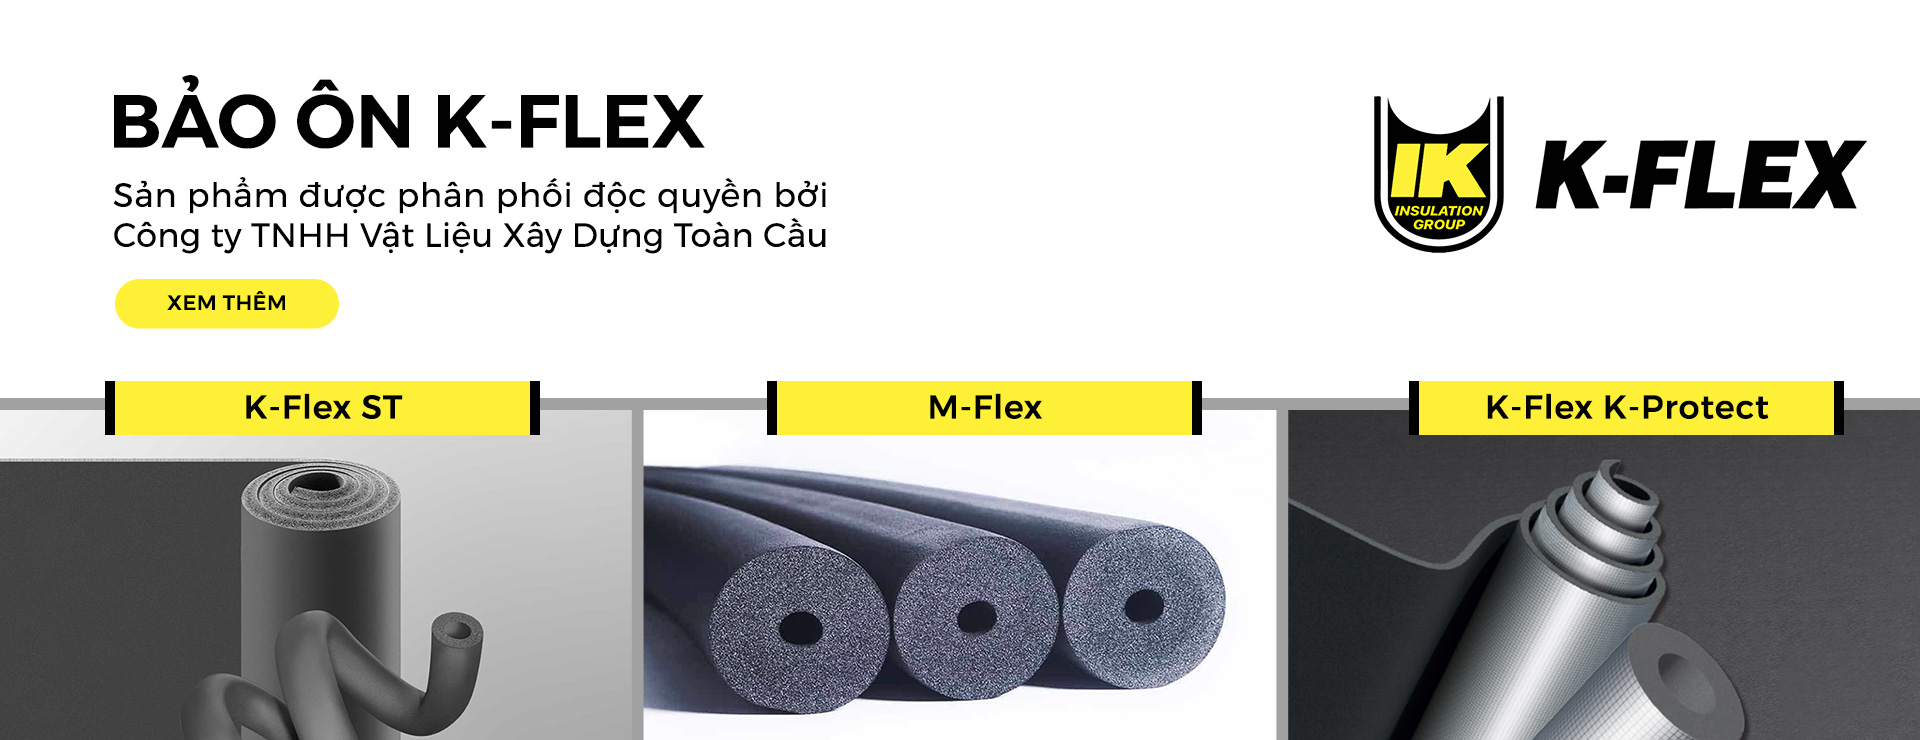 kflex-banner-website